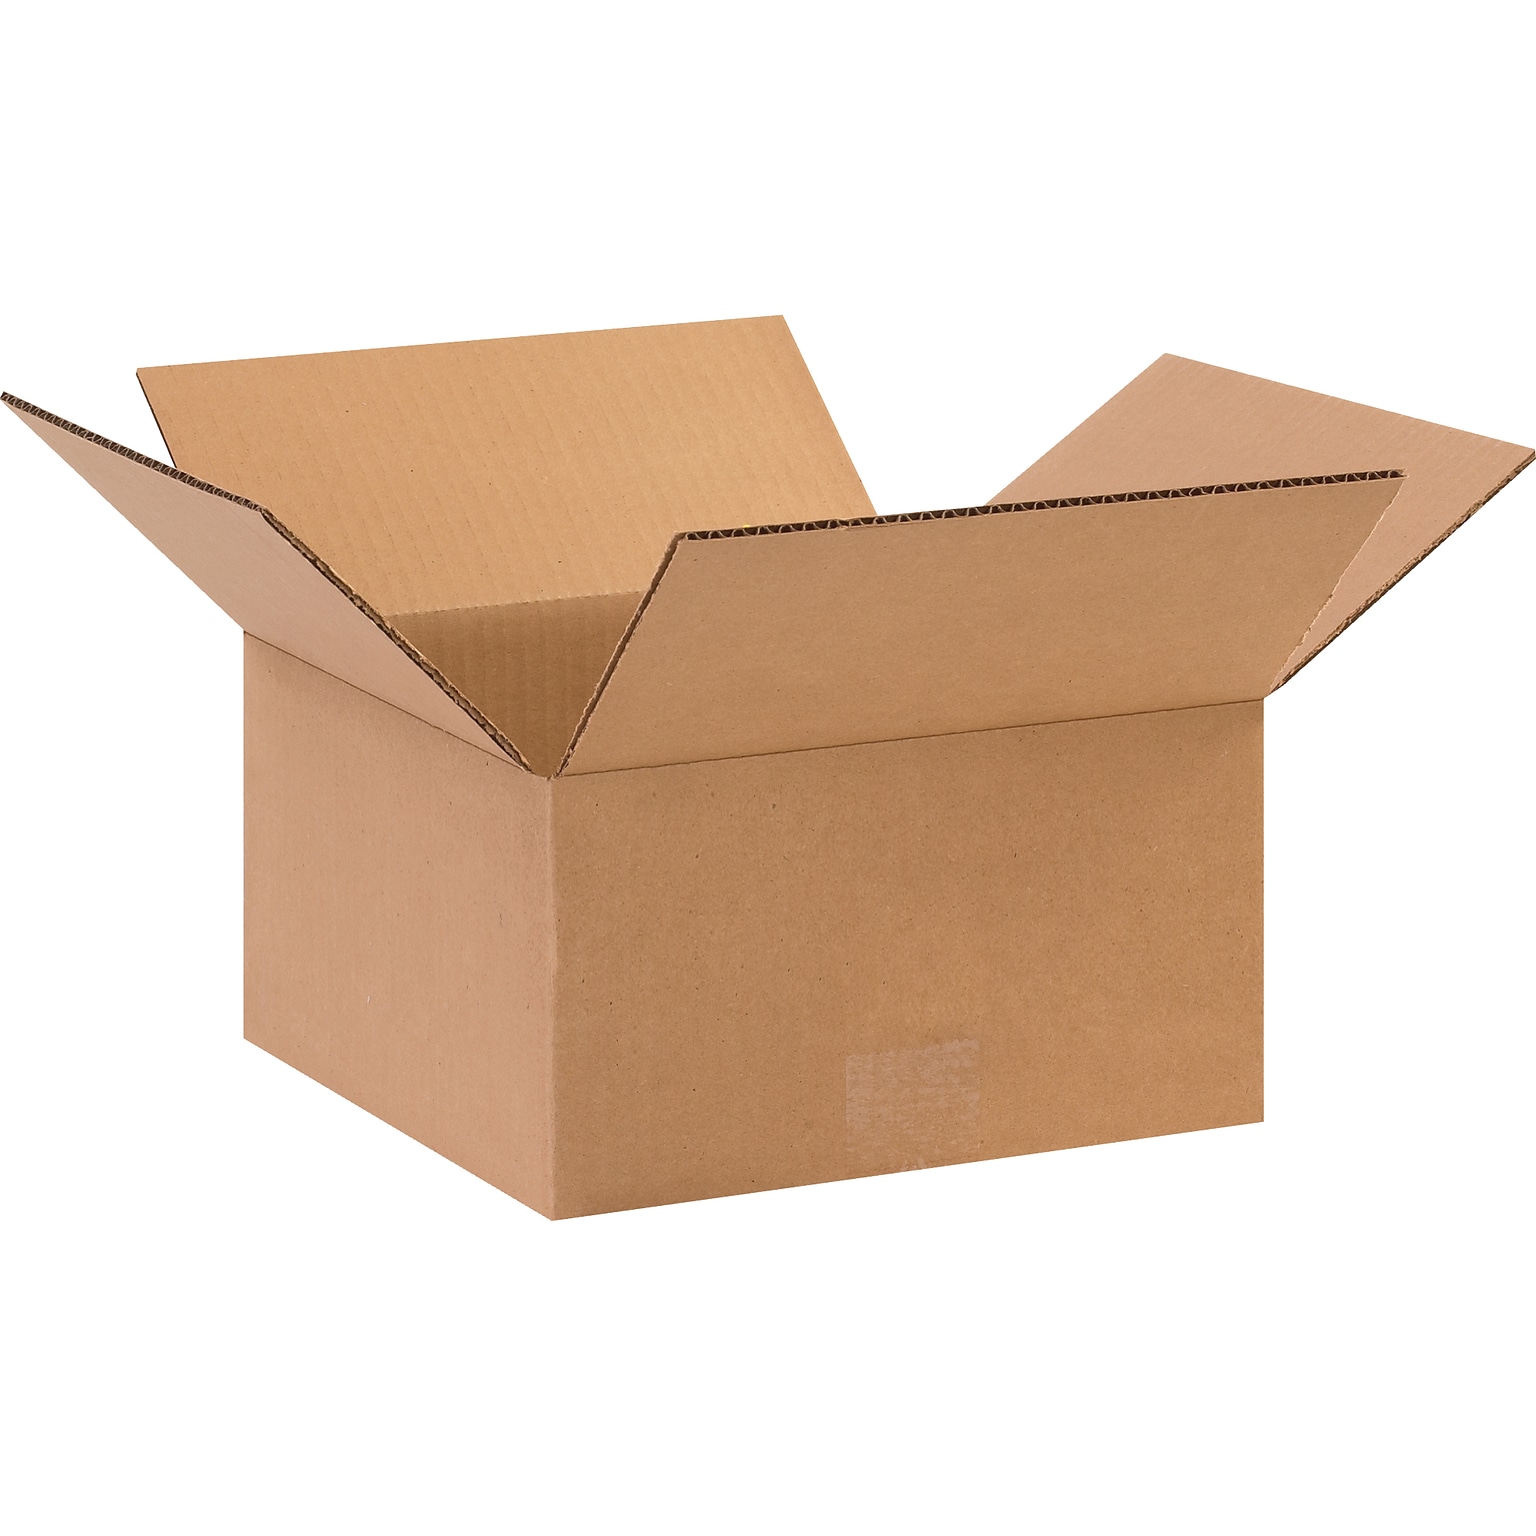 6 x 6 x 3 Moving Box, 200#, Kraft, 25/Bundle (663)